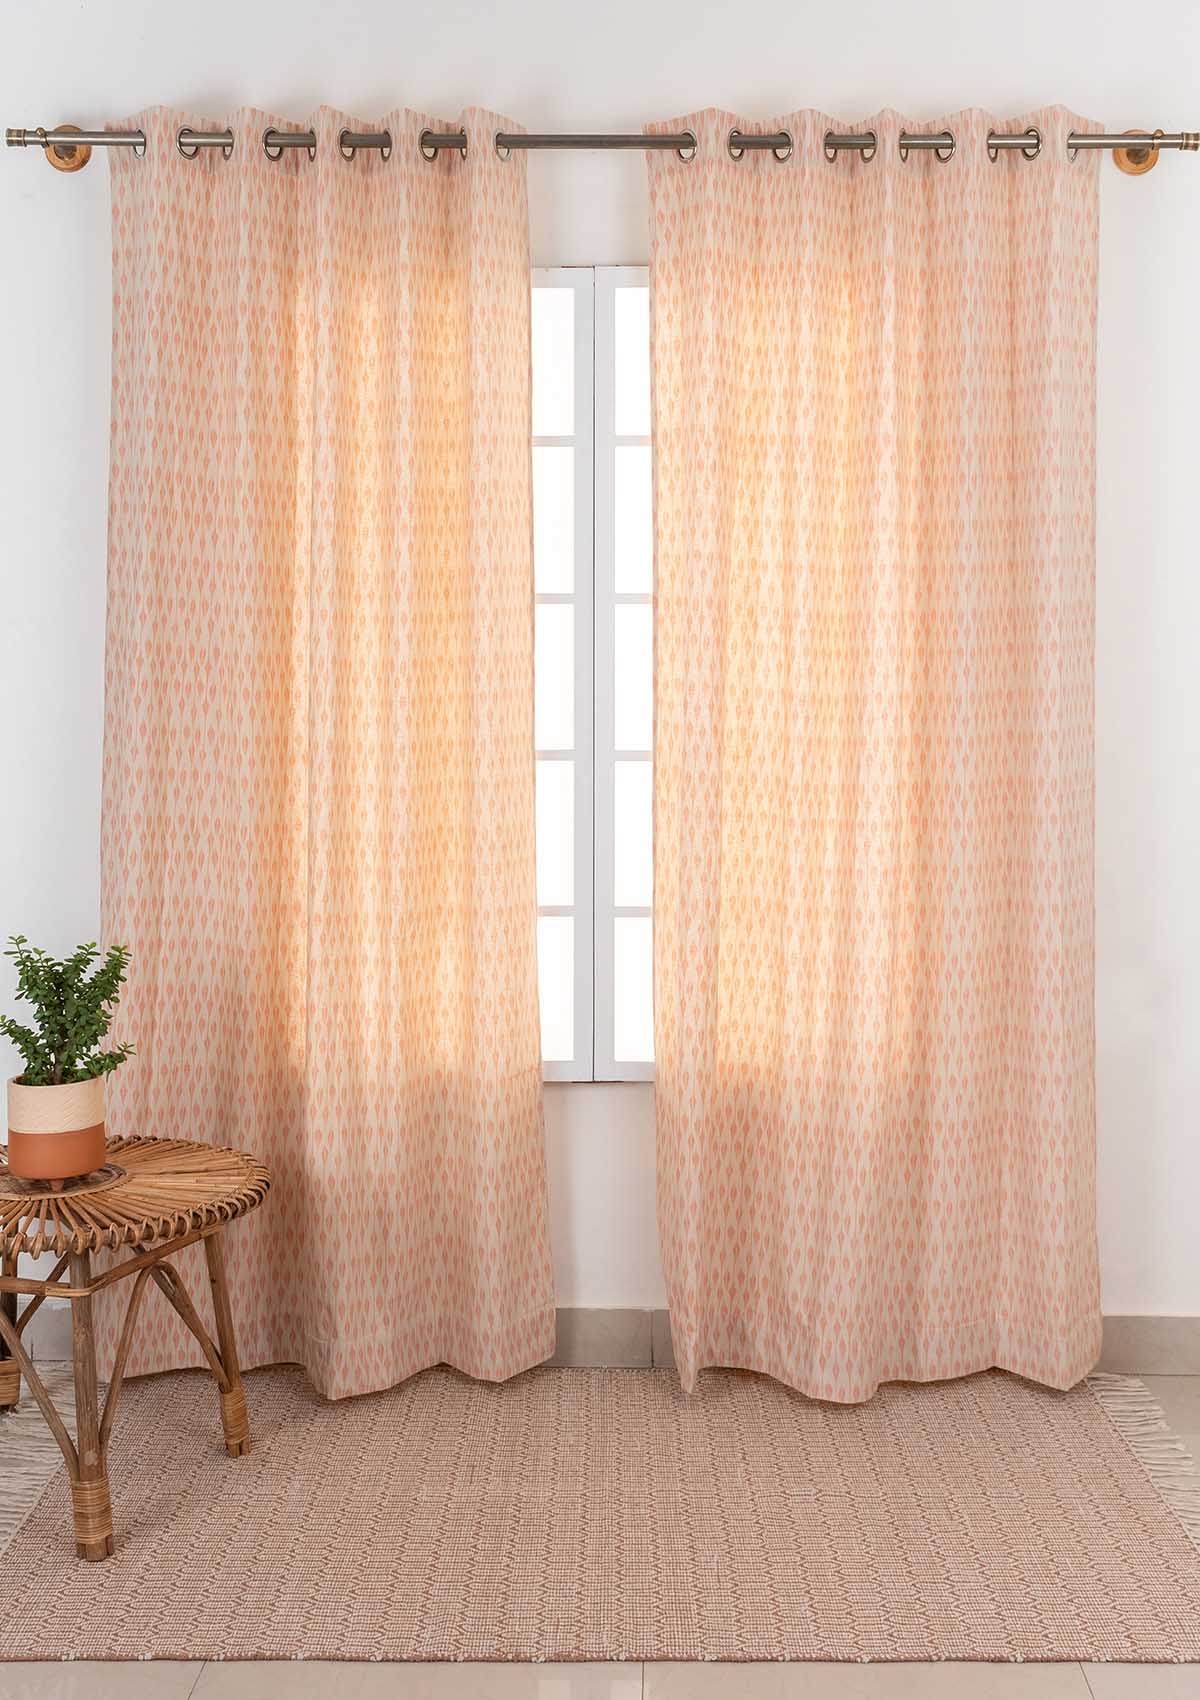 Chenab 100% Customizable Cotton ethnic curtain for living room - Room darkening - Beige